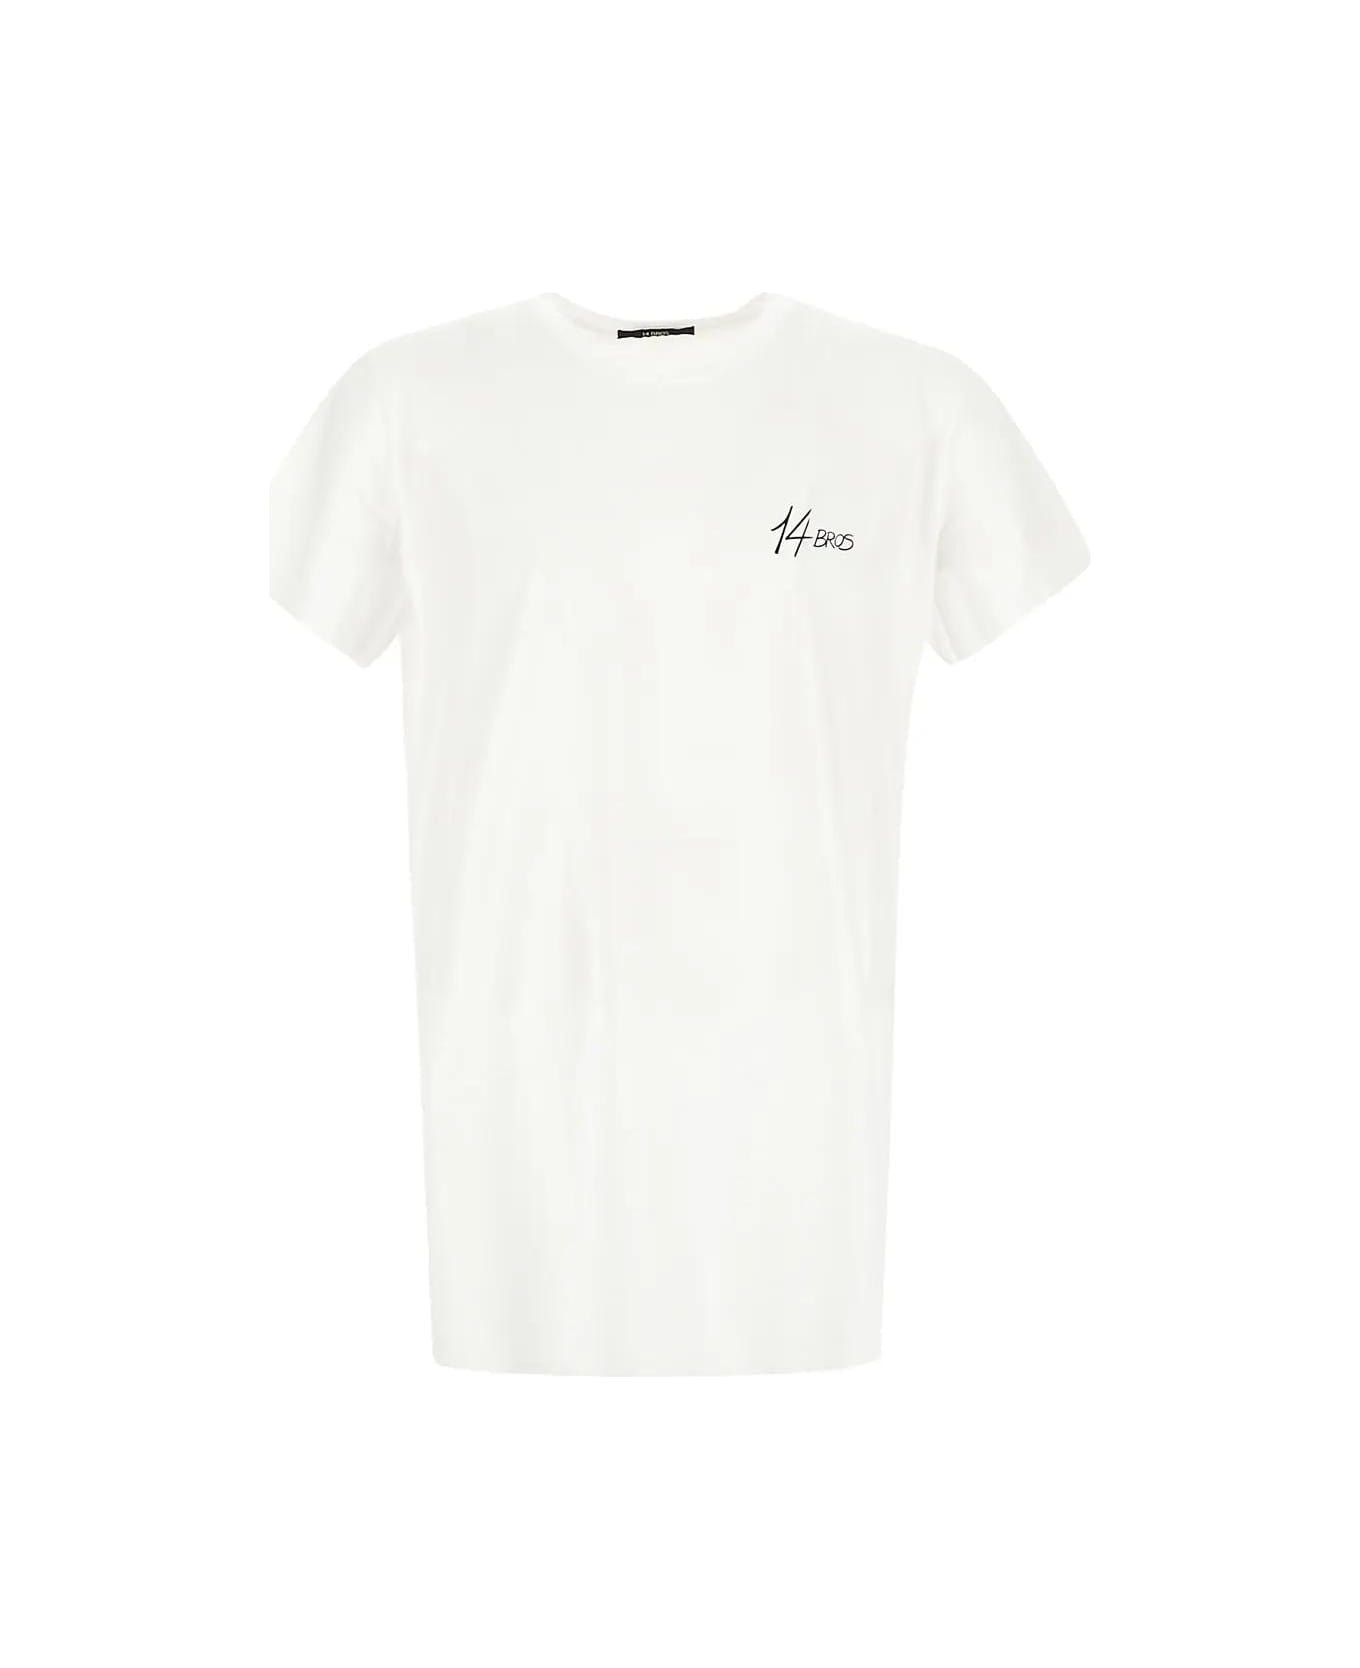 14 Bros Logo T-shirt - White